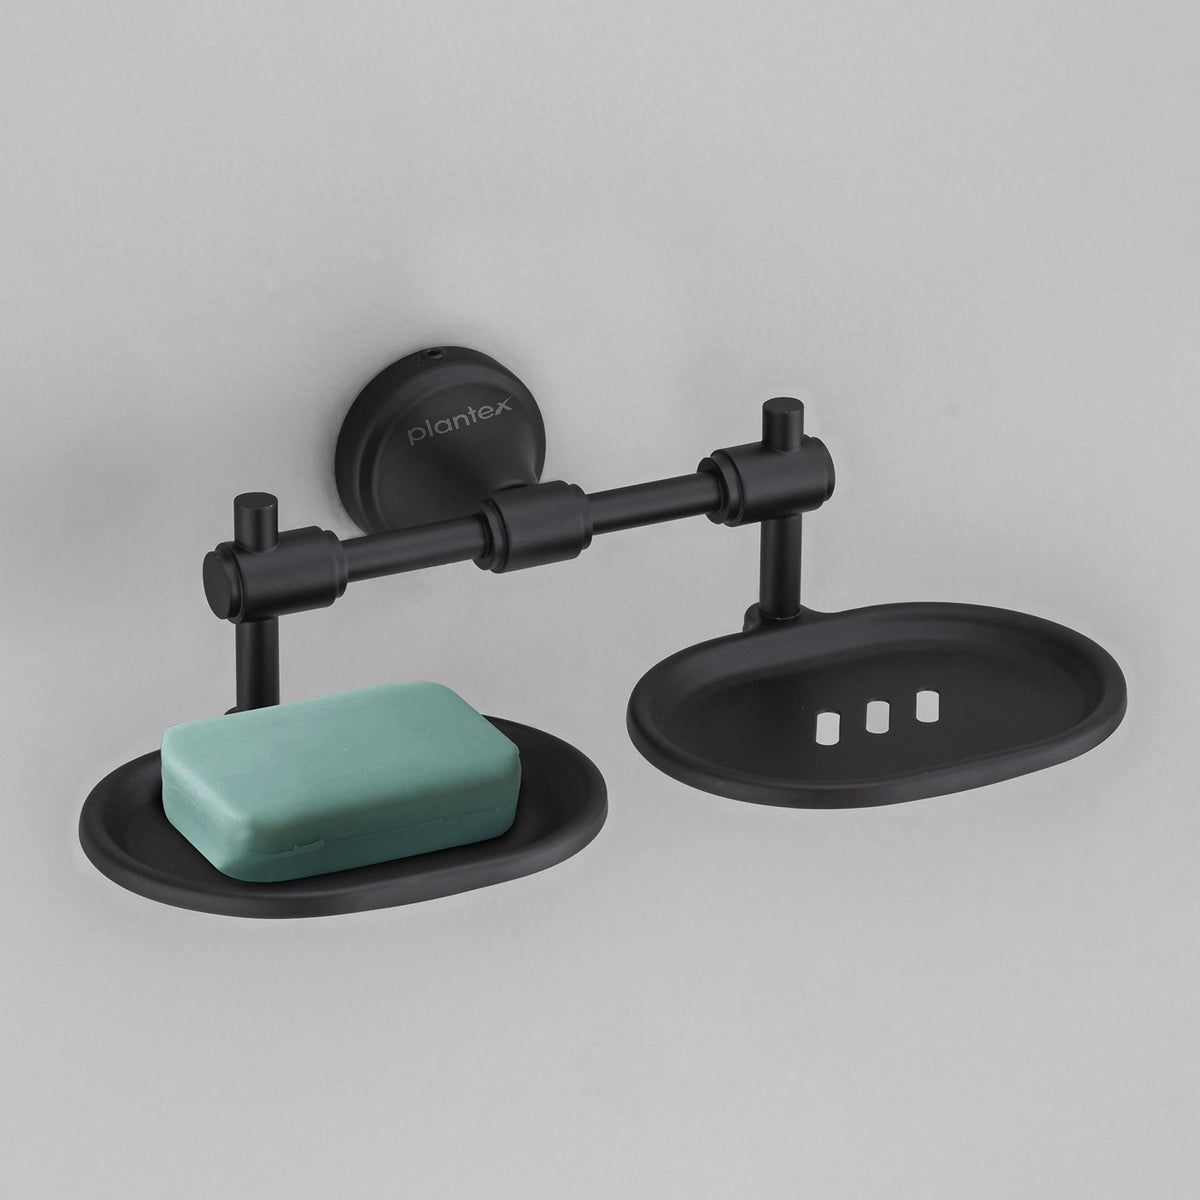 Plantex Niko Stainless Steel 304 Grade Double Soap Holder for Bathroom/Soap Dish/Bathroom Soap Stand/Bathroom Accessories (Black)